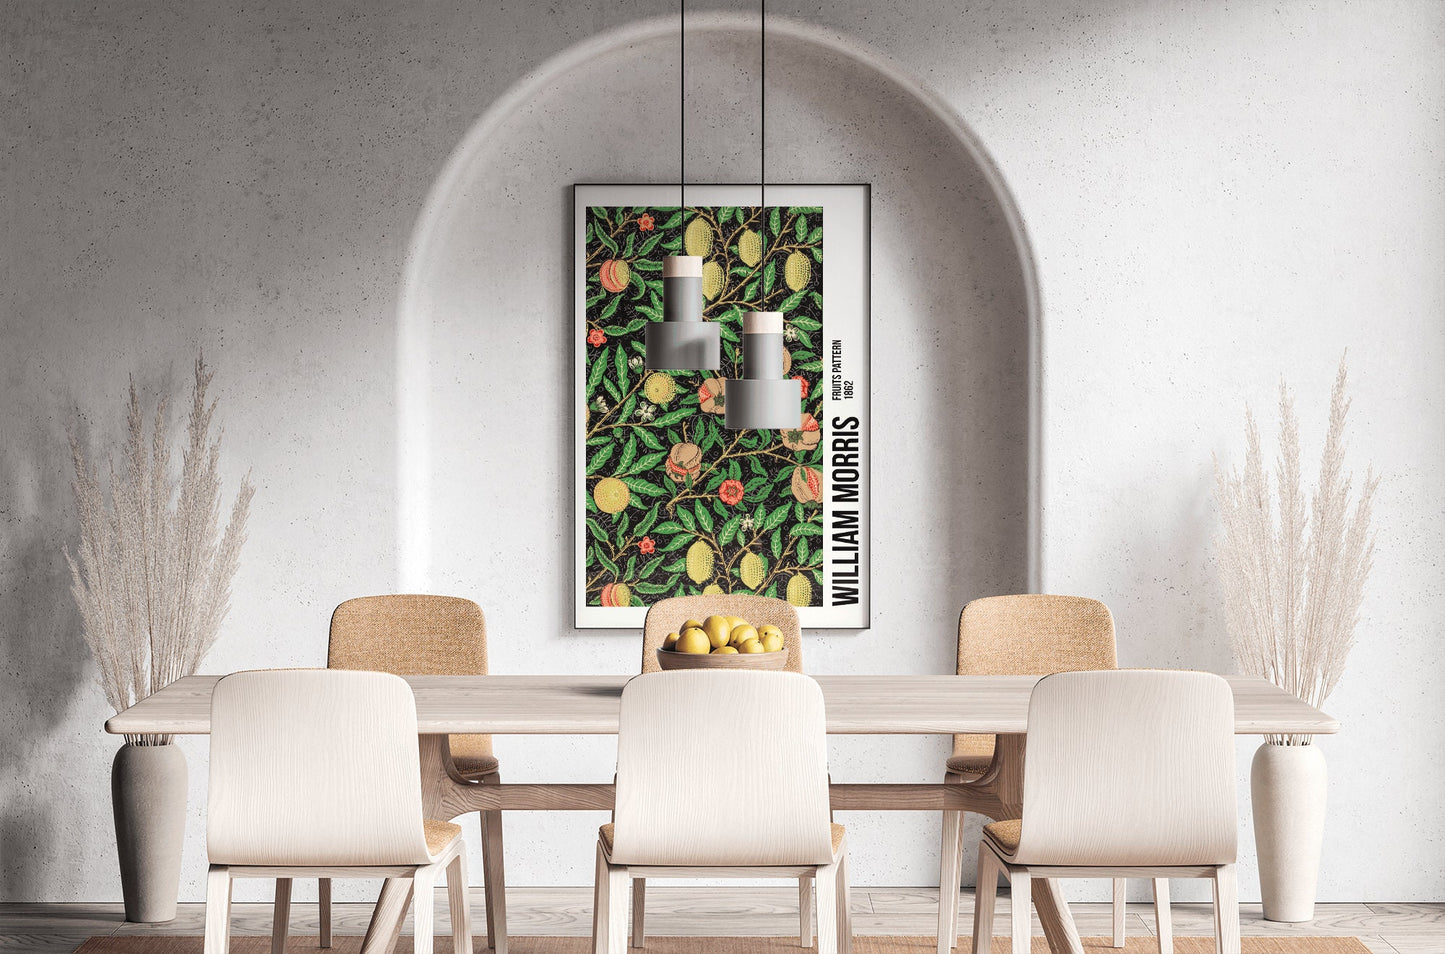 William Morris Exhibition Poster with Fruit Pattern Art Nouveau, Home Decor Wall Art